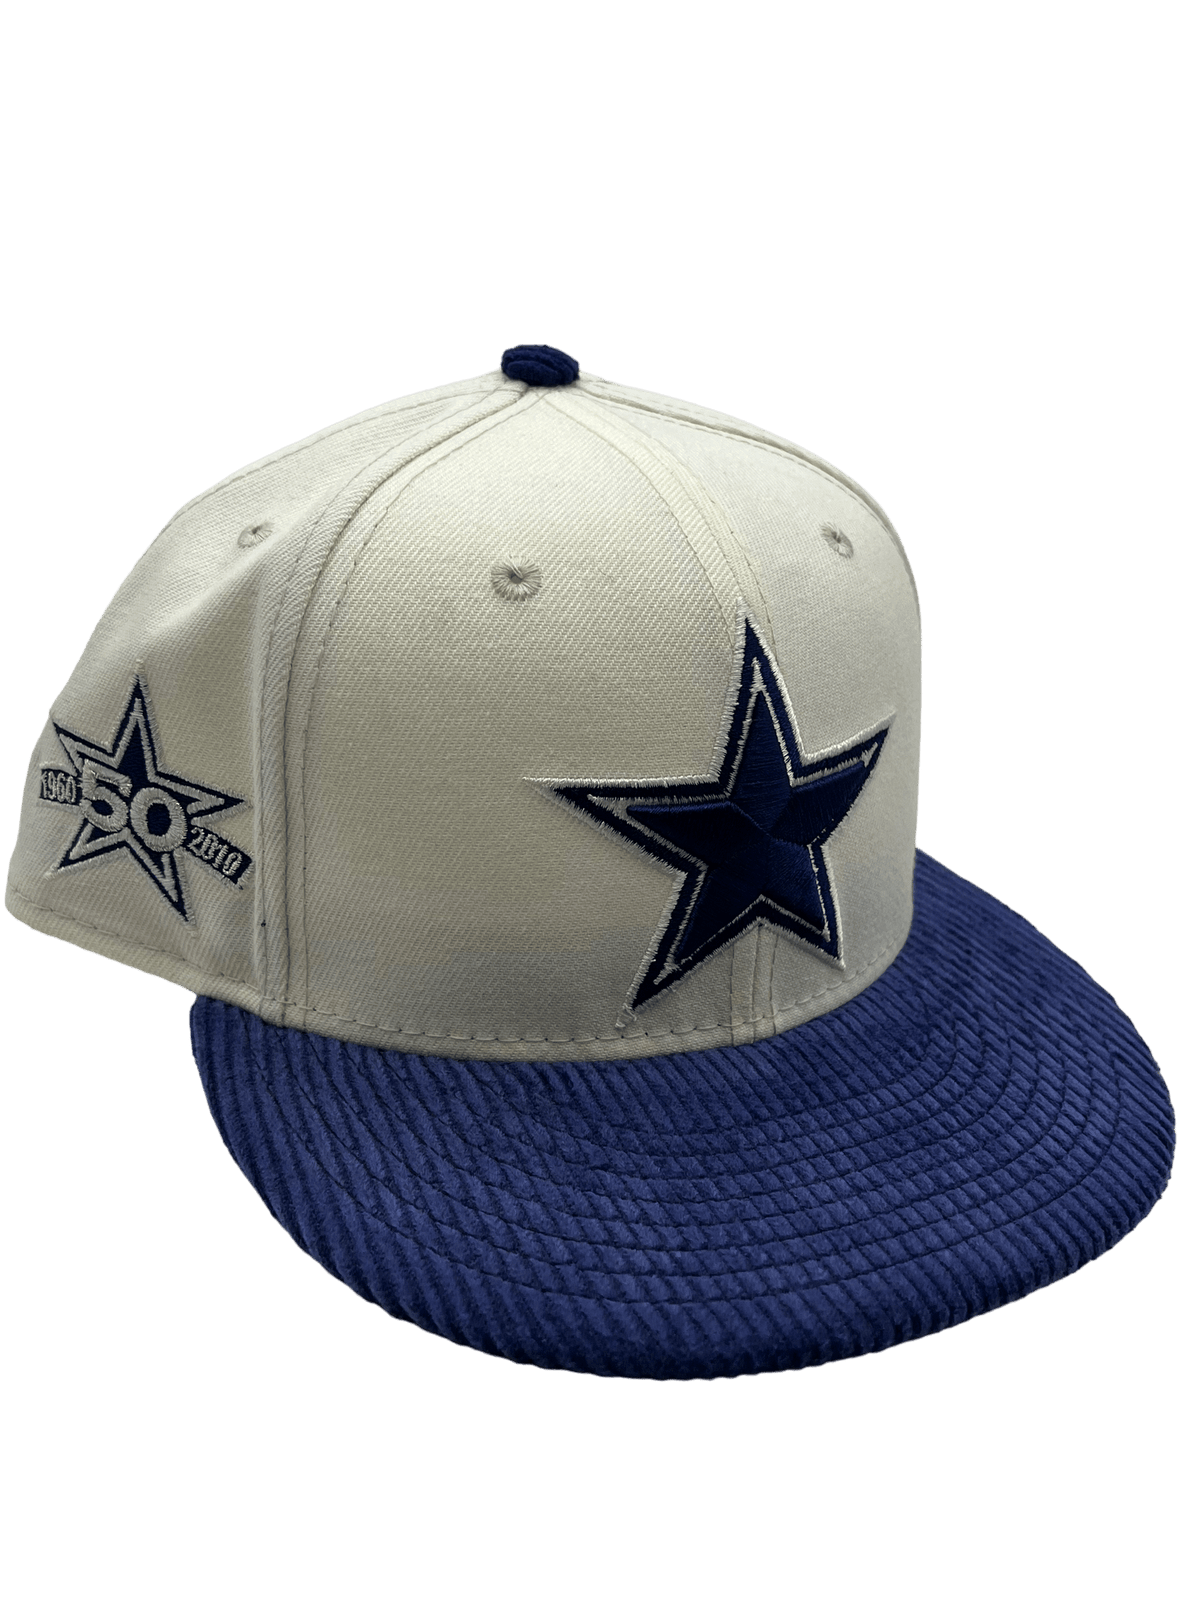 New Era Dallas Cowboys Sideline Ink Dye 9FIFTY Snapback Hat